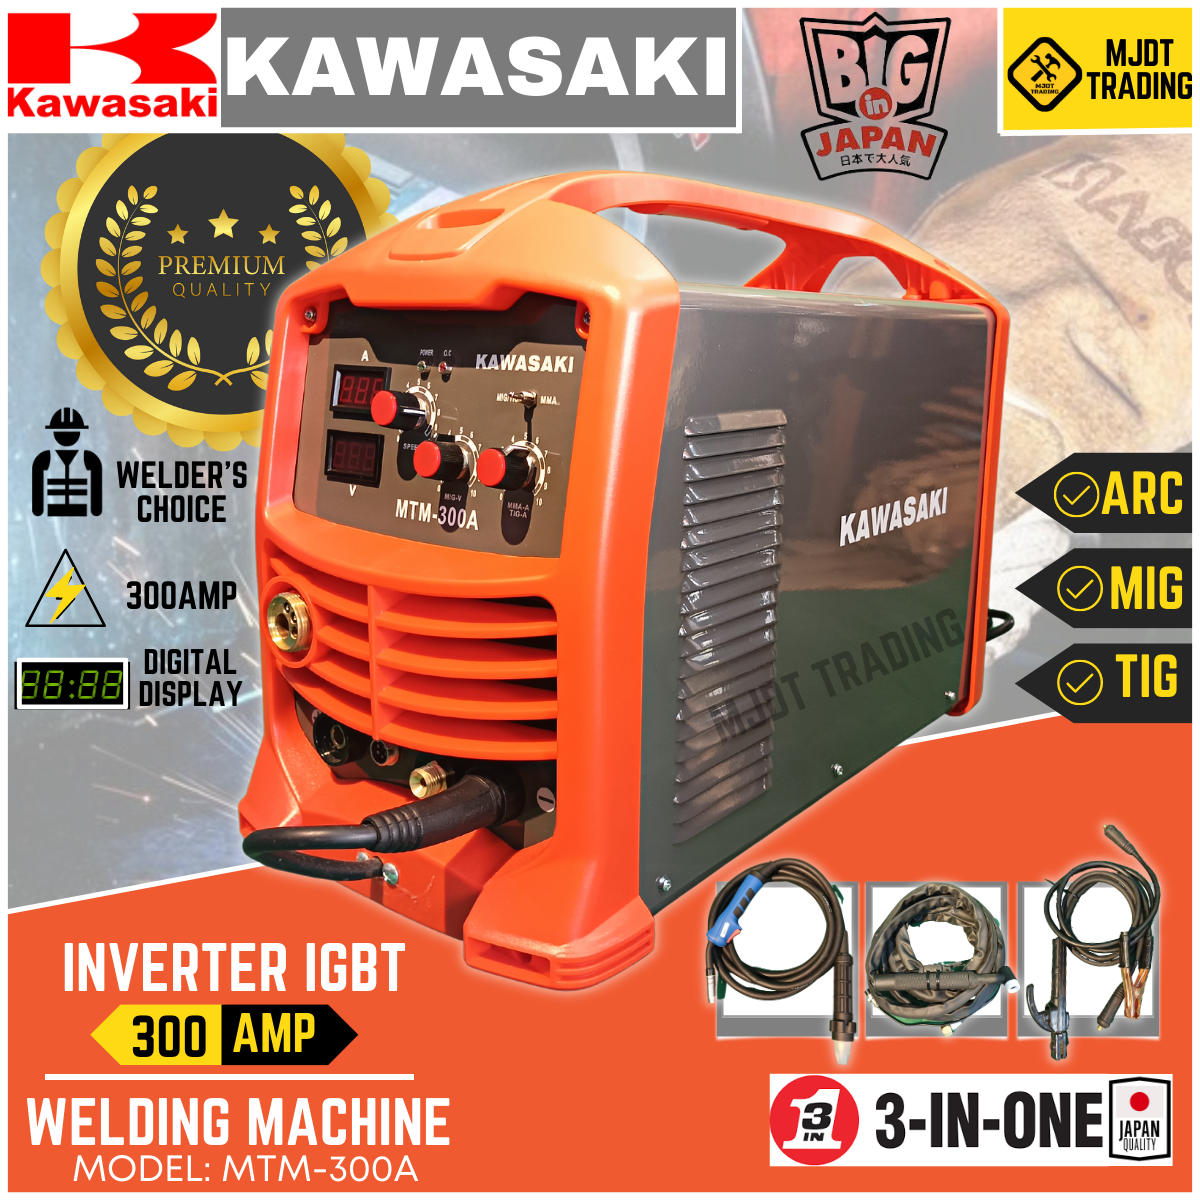 Kawasaki Japan High Quality In Inverter Welding Machine Arc